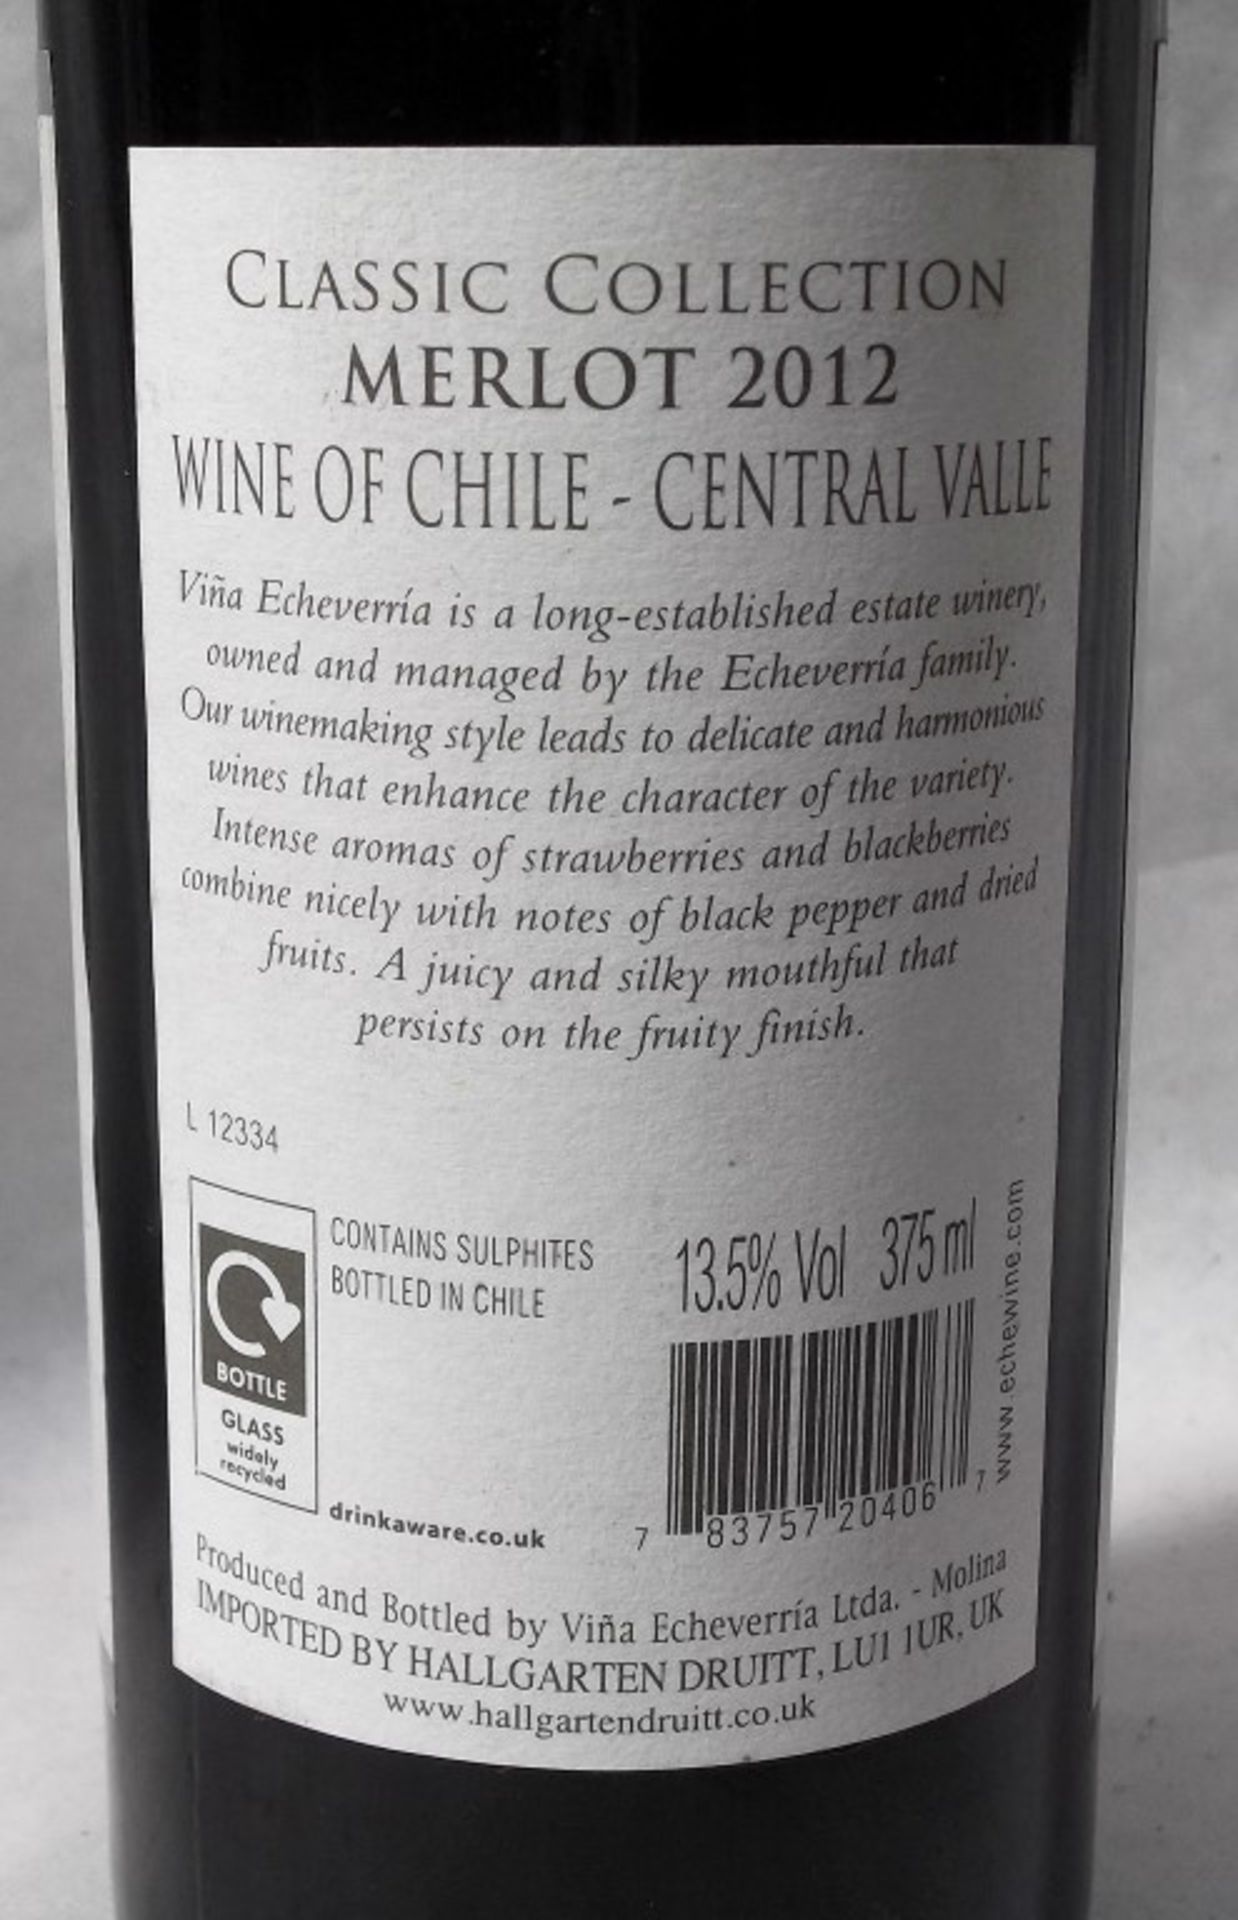 1 x Echeverria Classic Collection Merlot 2012 – 2012 - 375ml Bottle - Volume 13.5% - Ref W698 - - Image 2 of 3